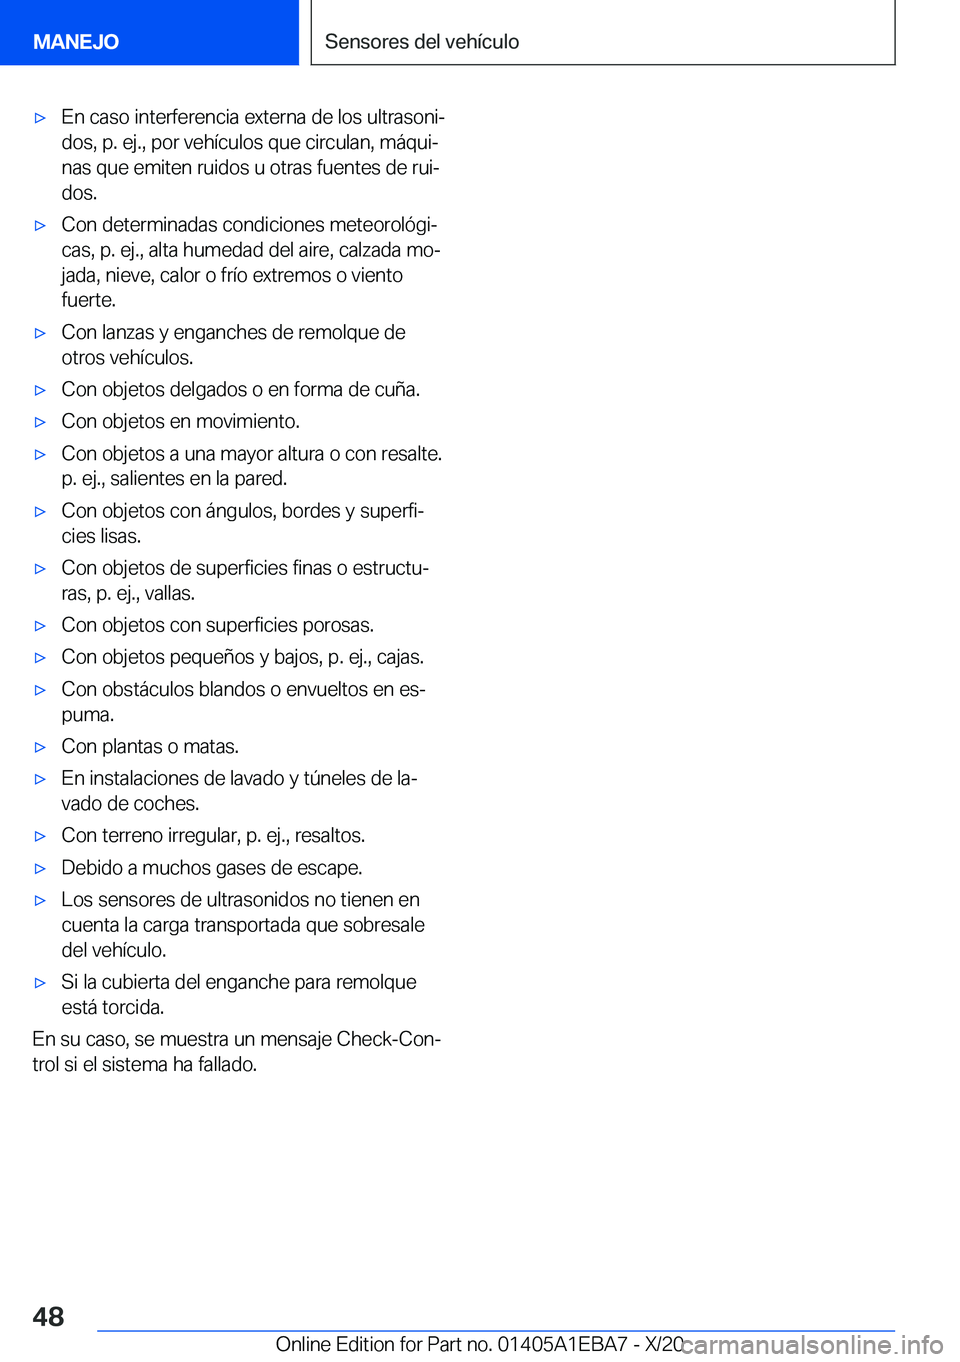 BMW 3 SERIES 2021  Manuales de Empleo (in Spanish) x�E�n��c�a�s�o��i�n�t�e�r�f�e�r�e�n�c�i�a��e�x�t�e�r�n�a��d�e��l�o�s��u�l�t�r�a�s�o�n�iª
�d�o�s�,��p�.��e�j�.�,��p�o�r��v�e�h�